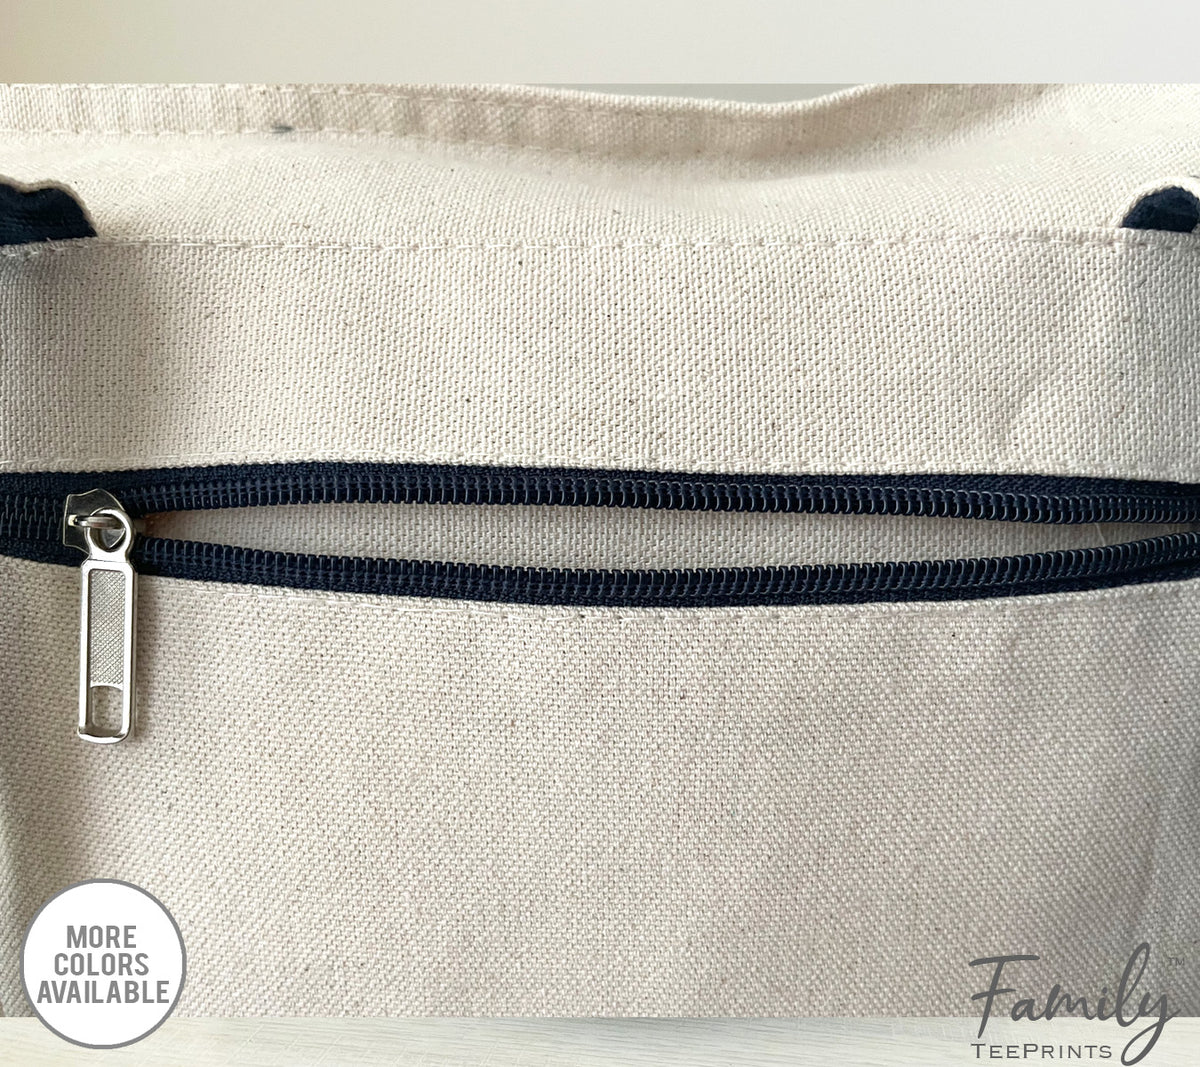 Mimi's Getaway Bag - Mimi Zippered Tote Bag - Two Tone Bag - Mimi Gift - familyteeprints